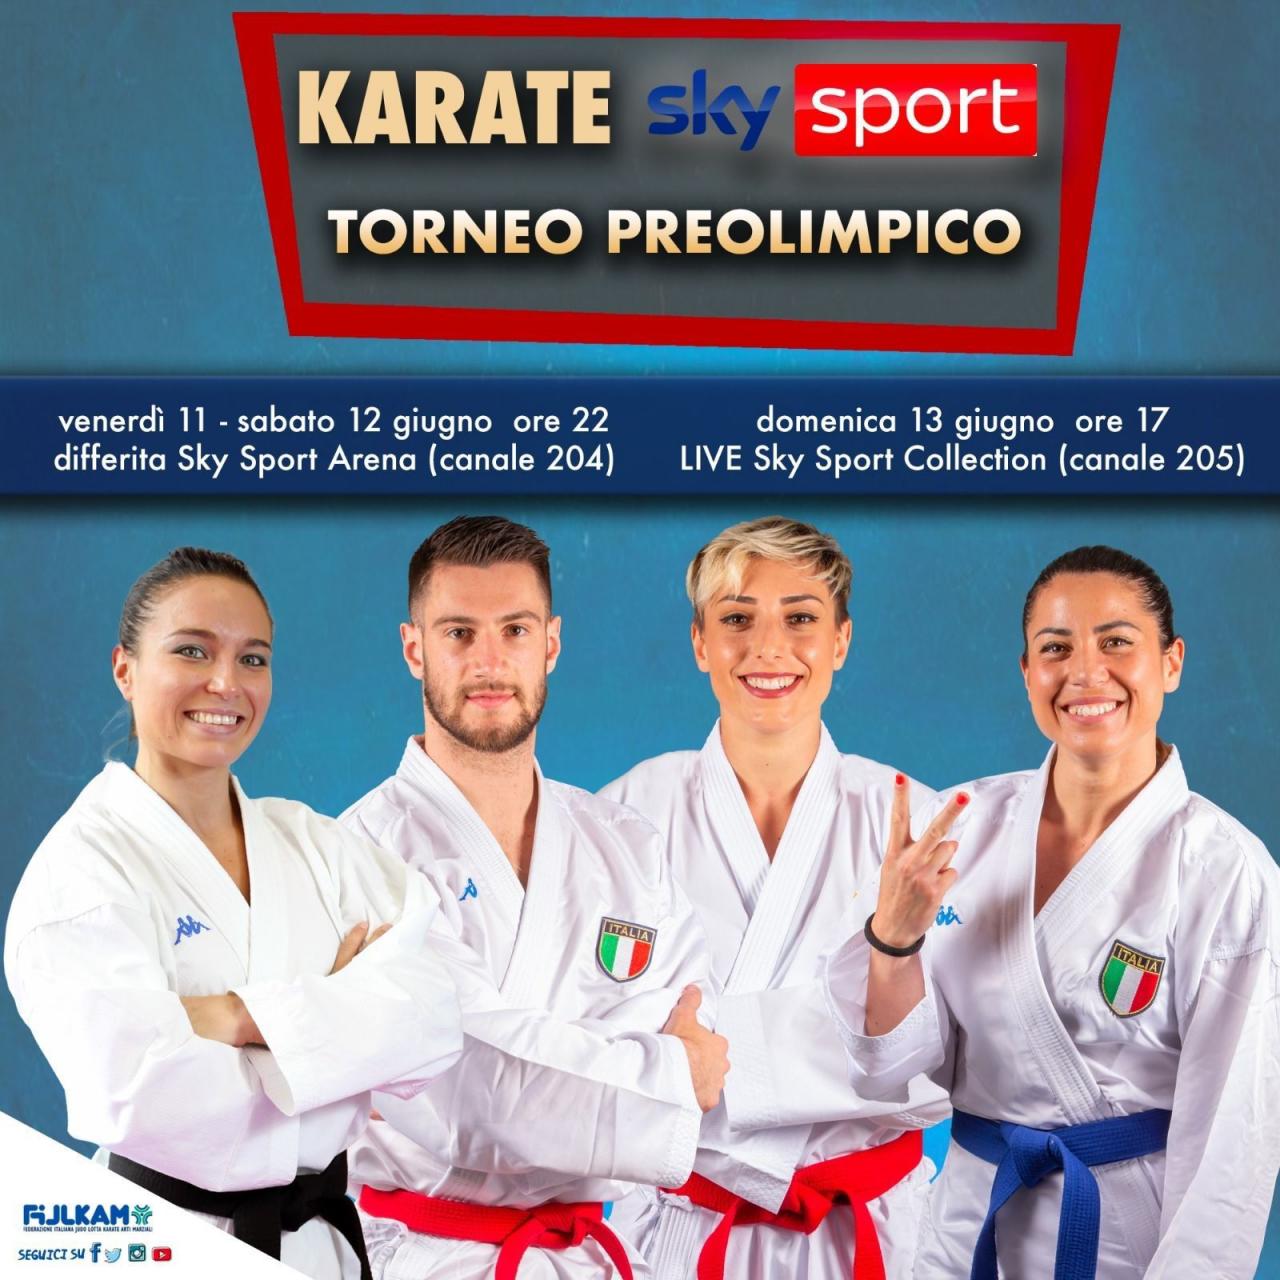 images/karate/large/Torneo_Preolimpico_Parigi.jpeg